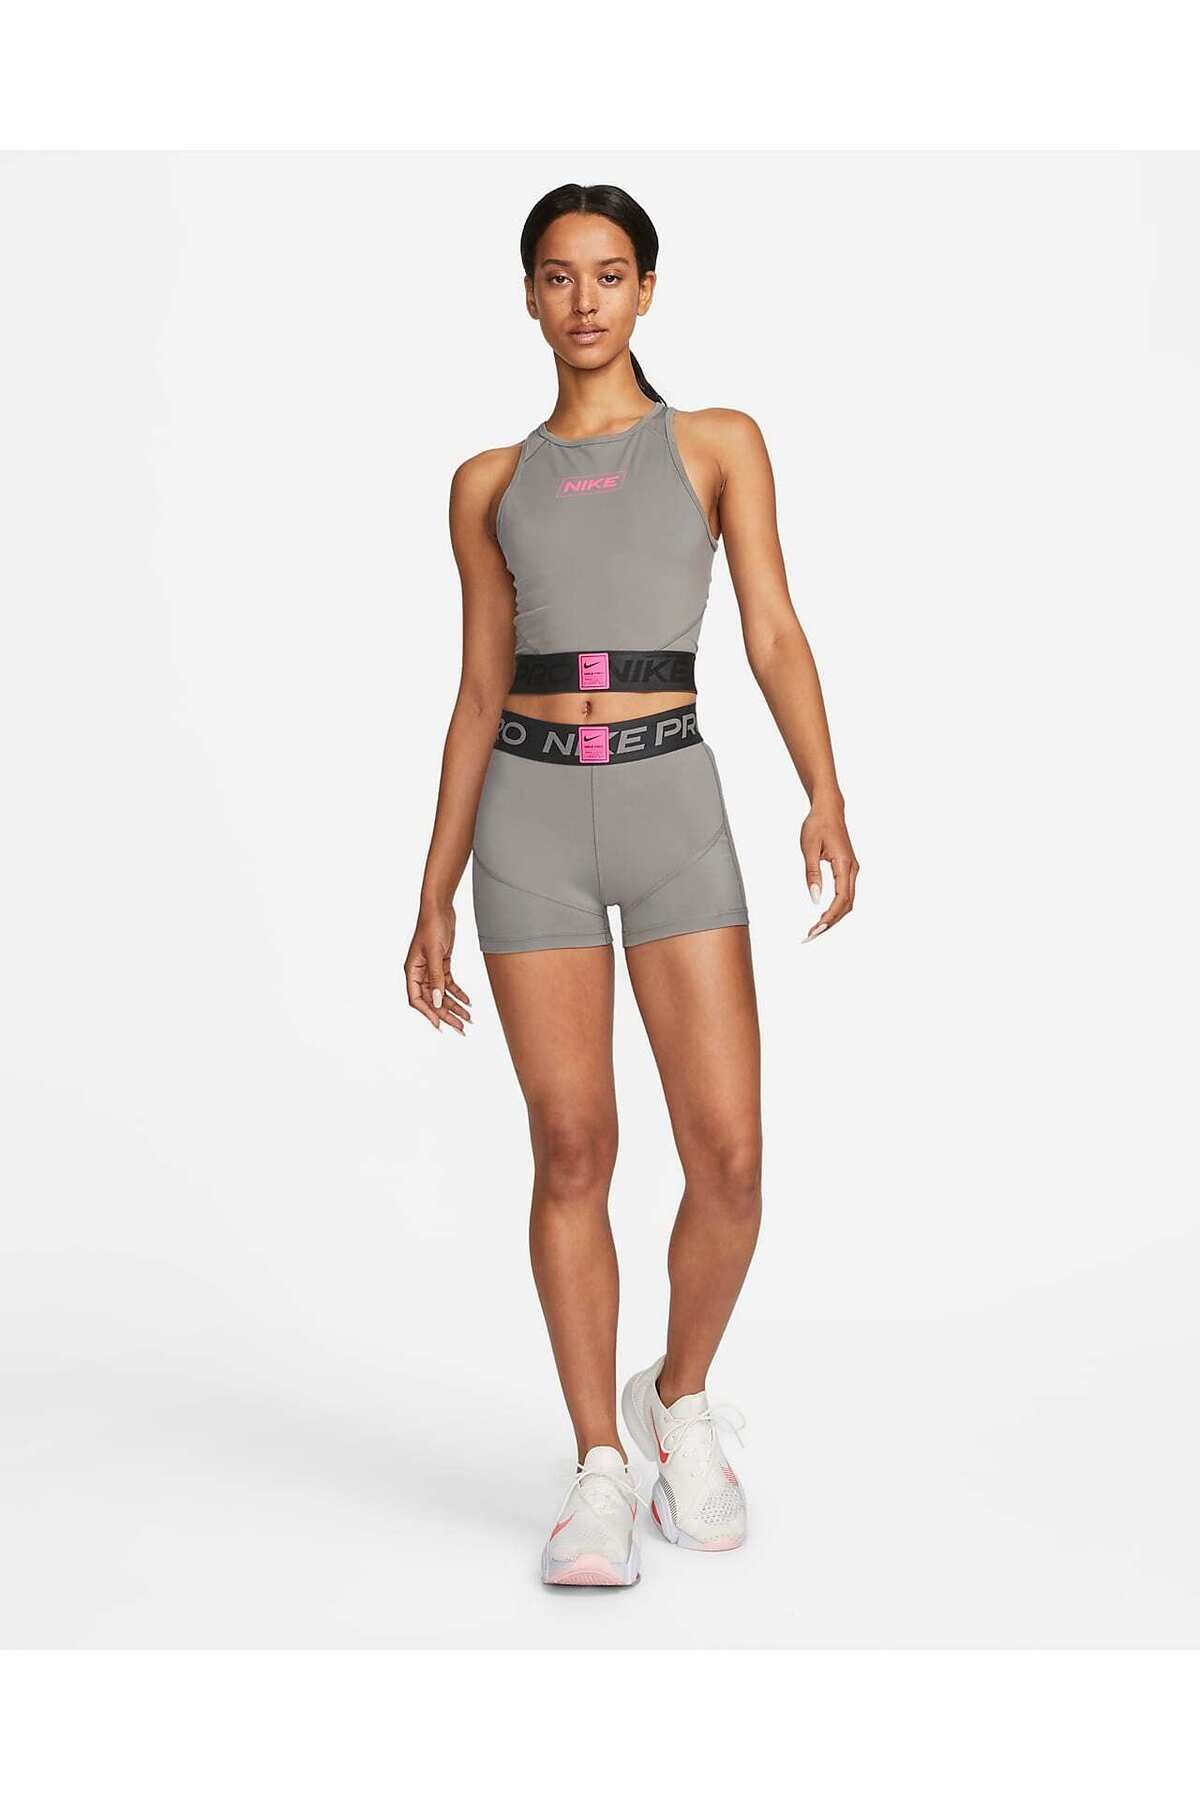 Nike Yoga Stmt Tank Female Athlete Cu6321-298 - Trendyol